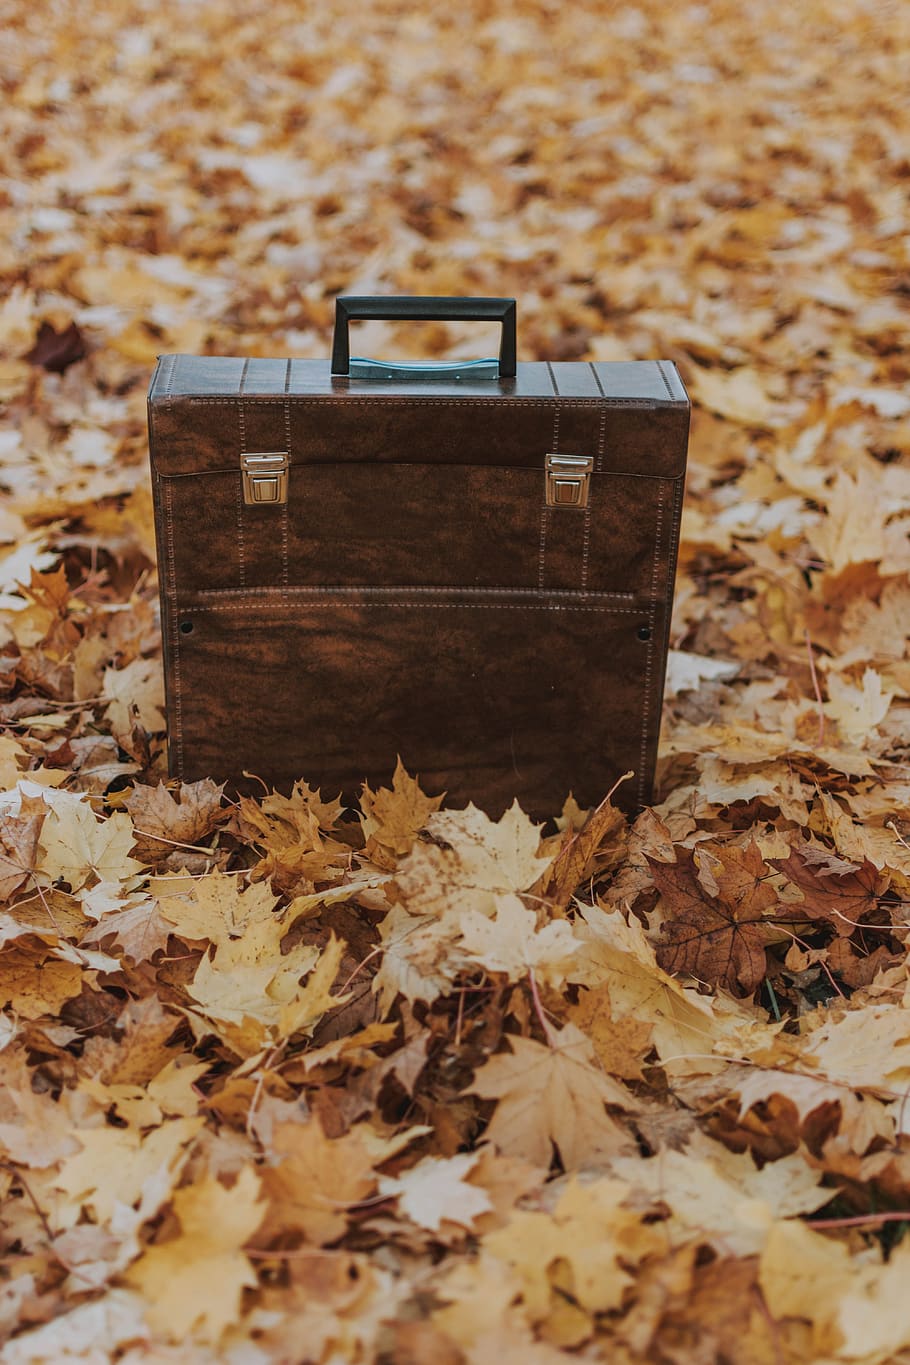 luggage, leaves, nature, autumn, leaf, plant part, change, land, still life, close-up